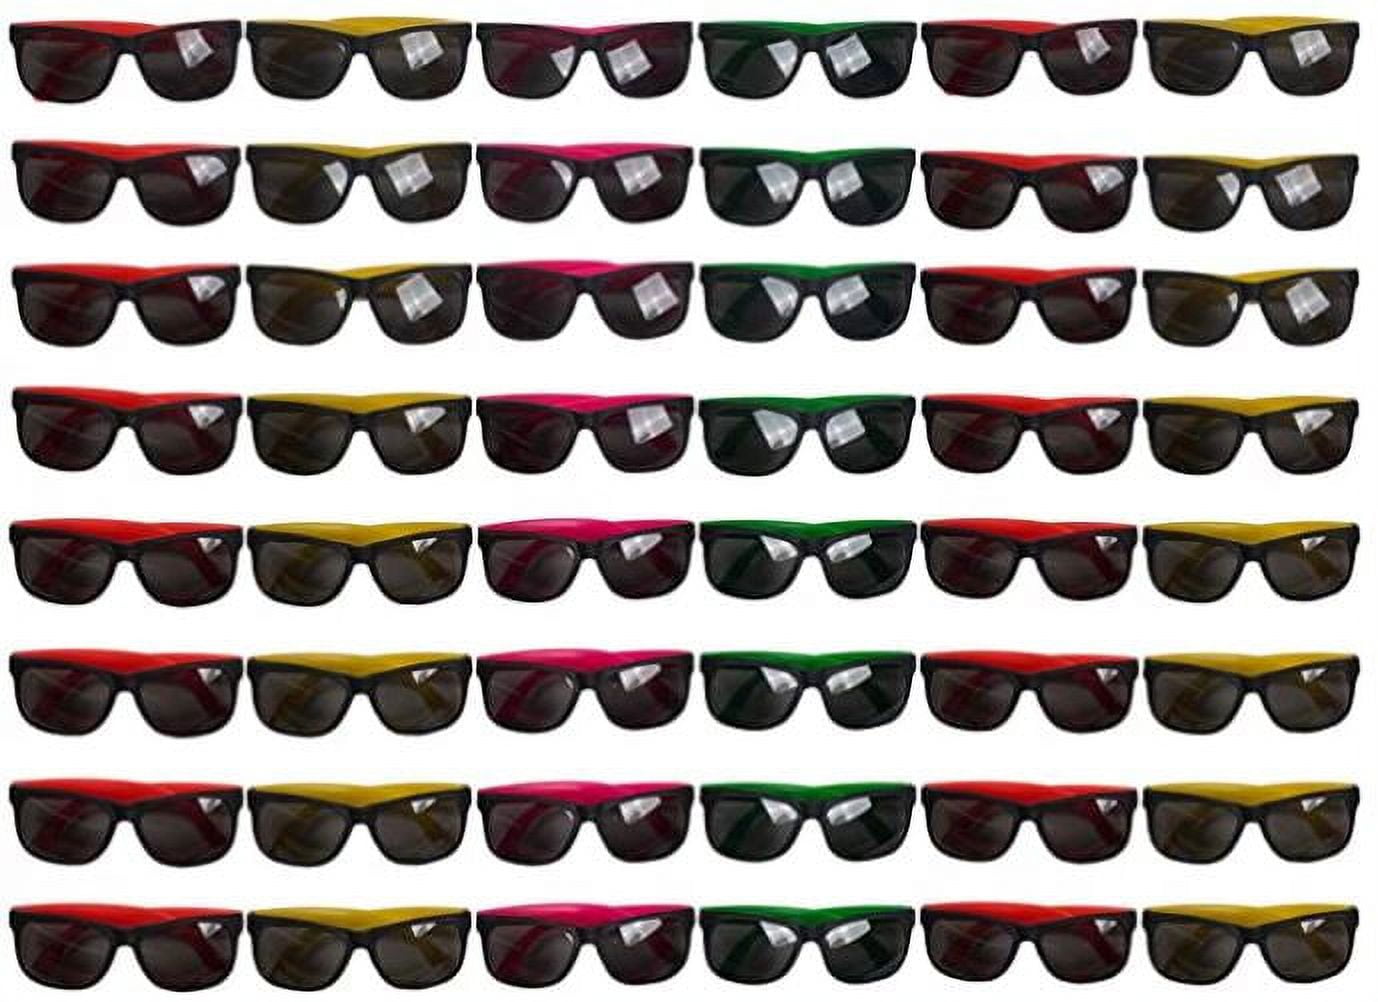 party sunglasses price